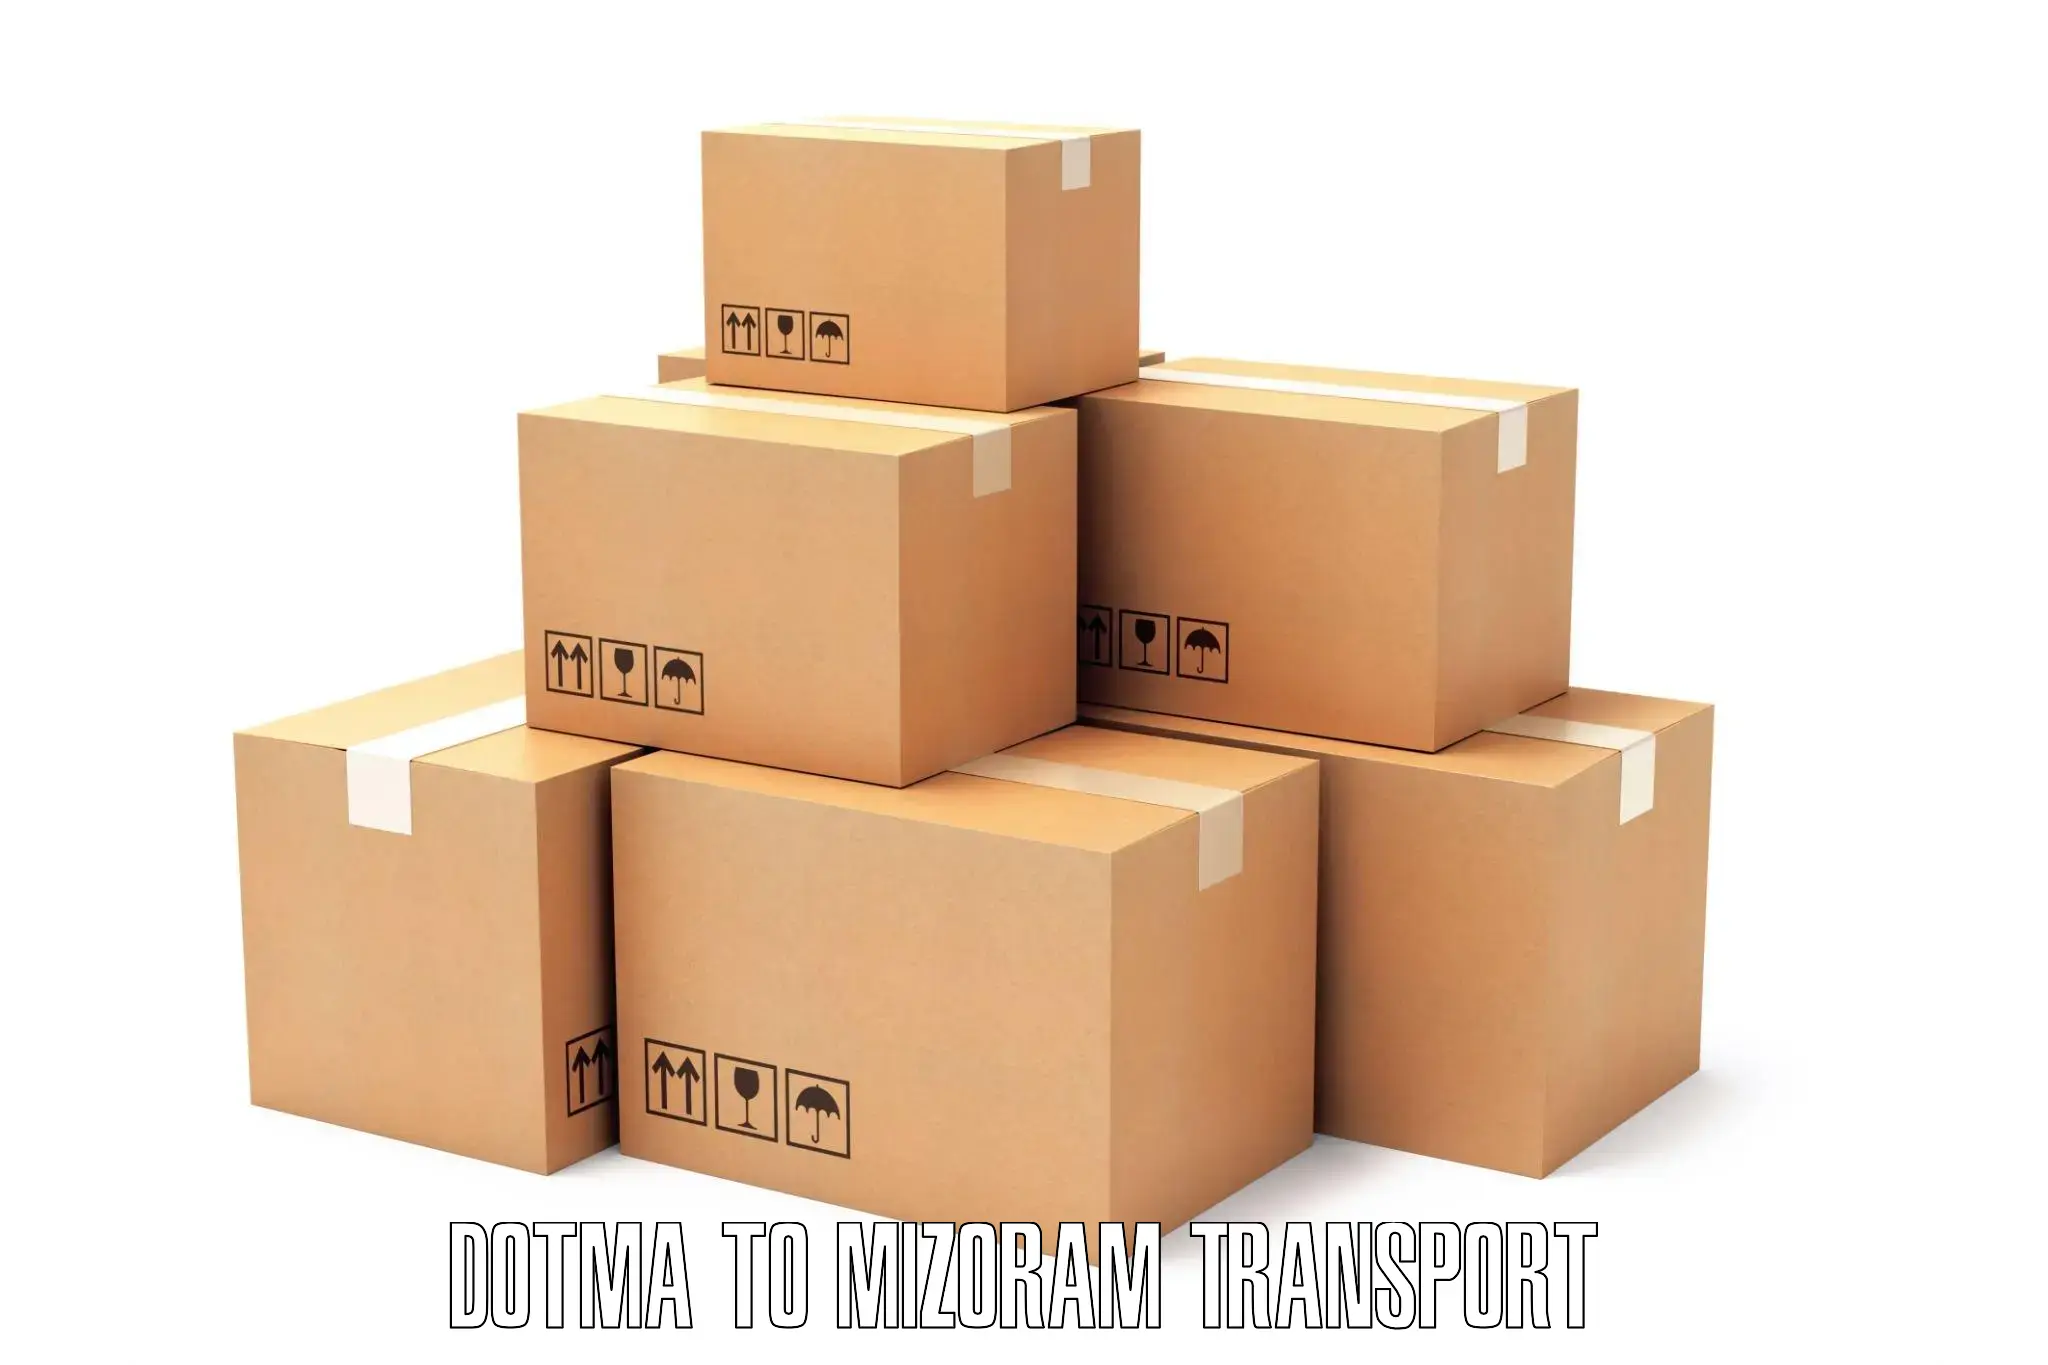 Bike shipping service Dotma to Mizoram